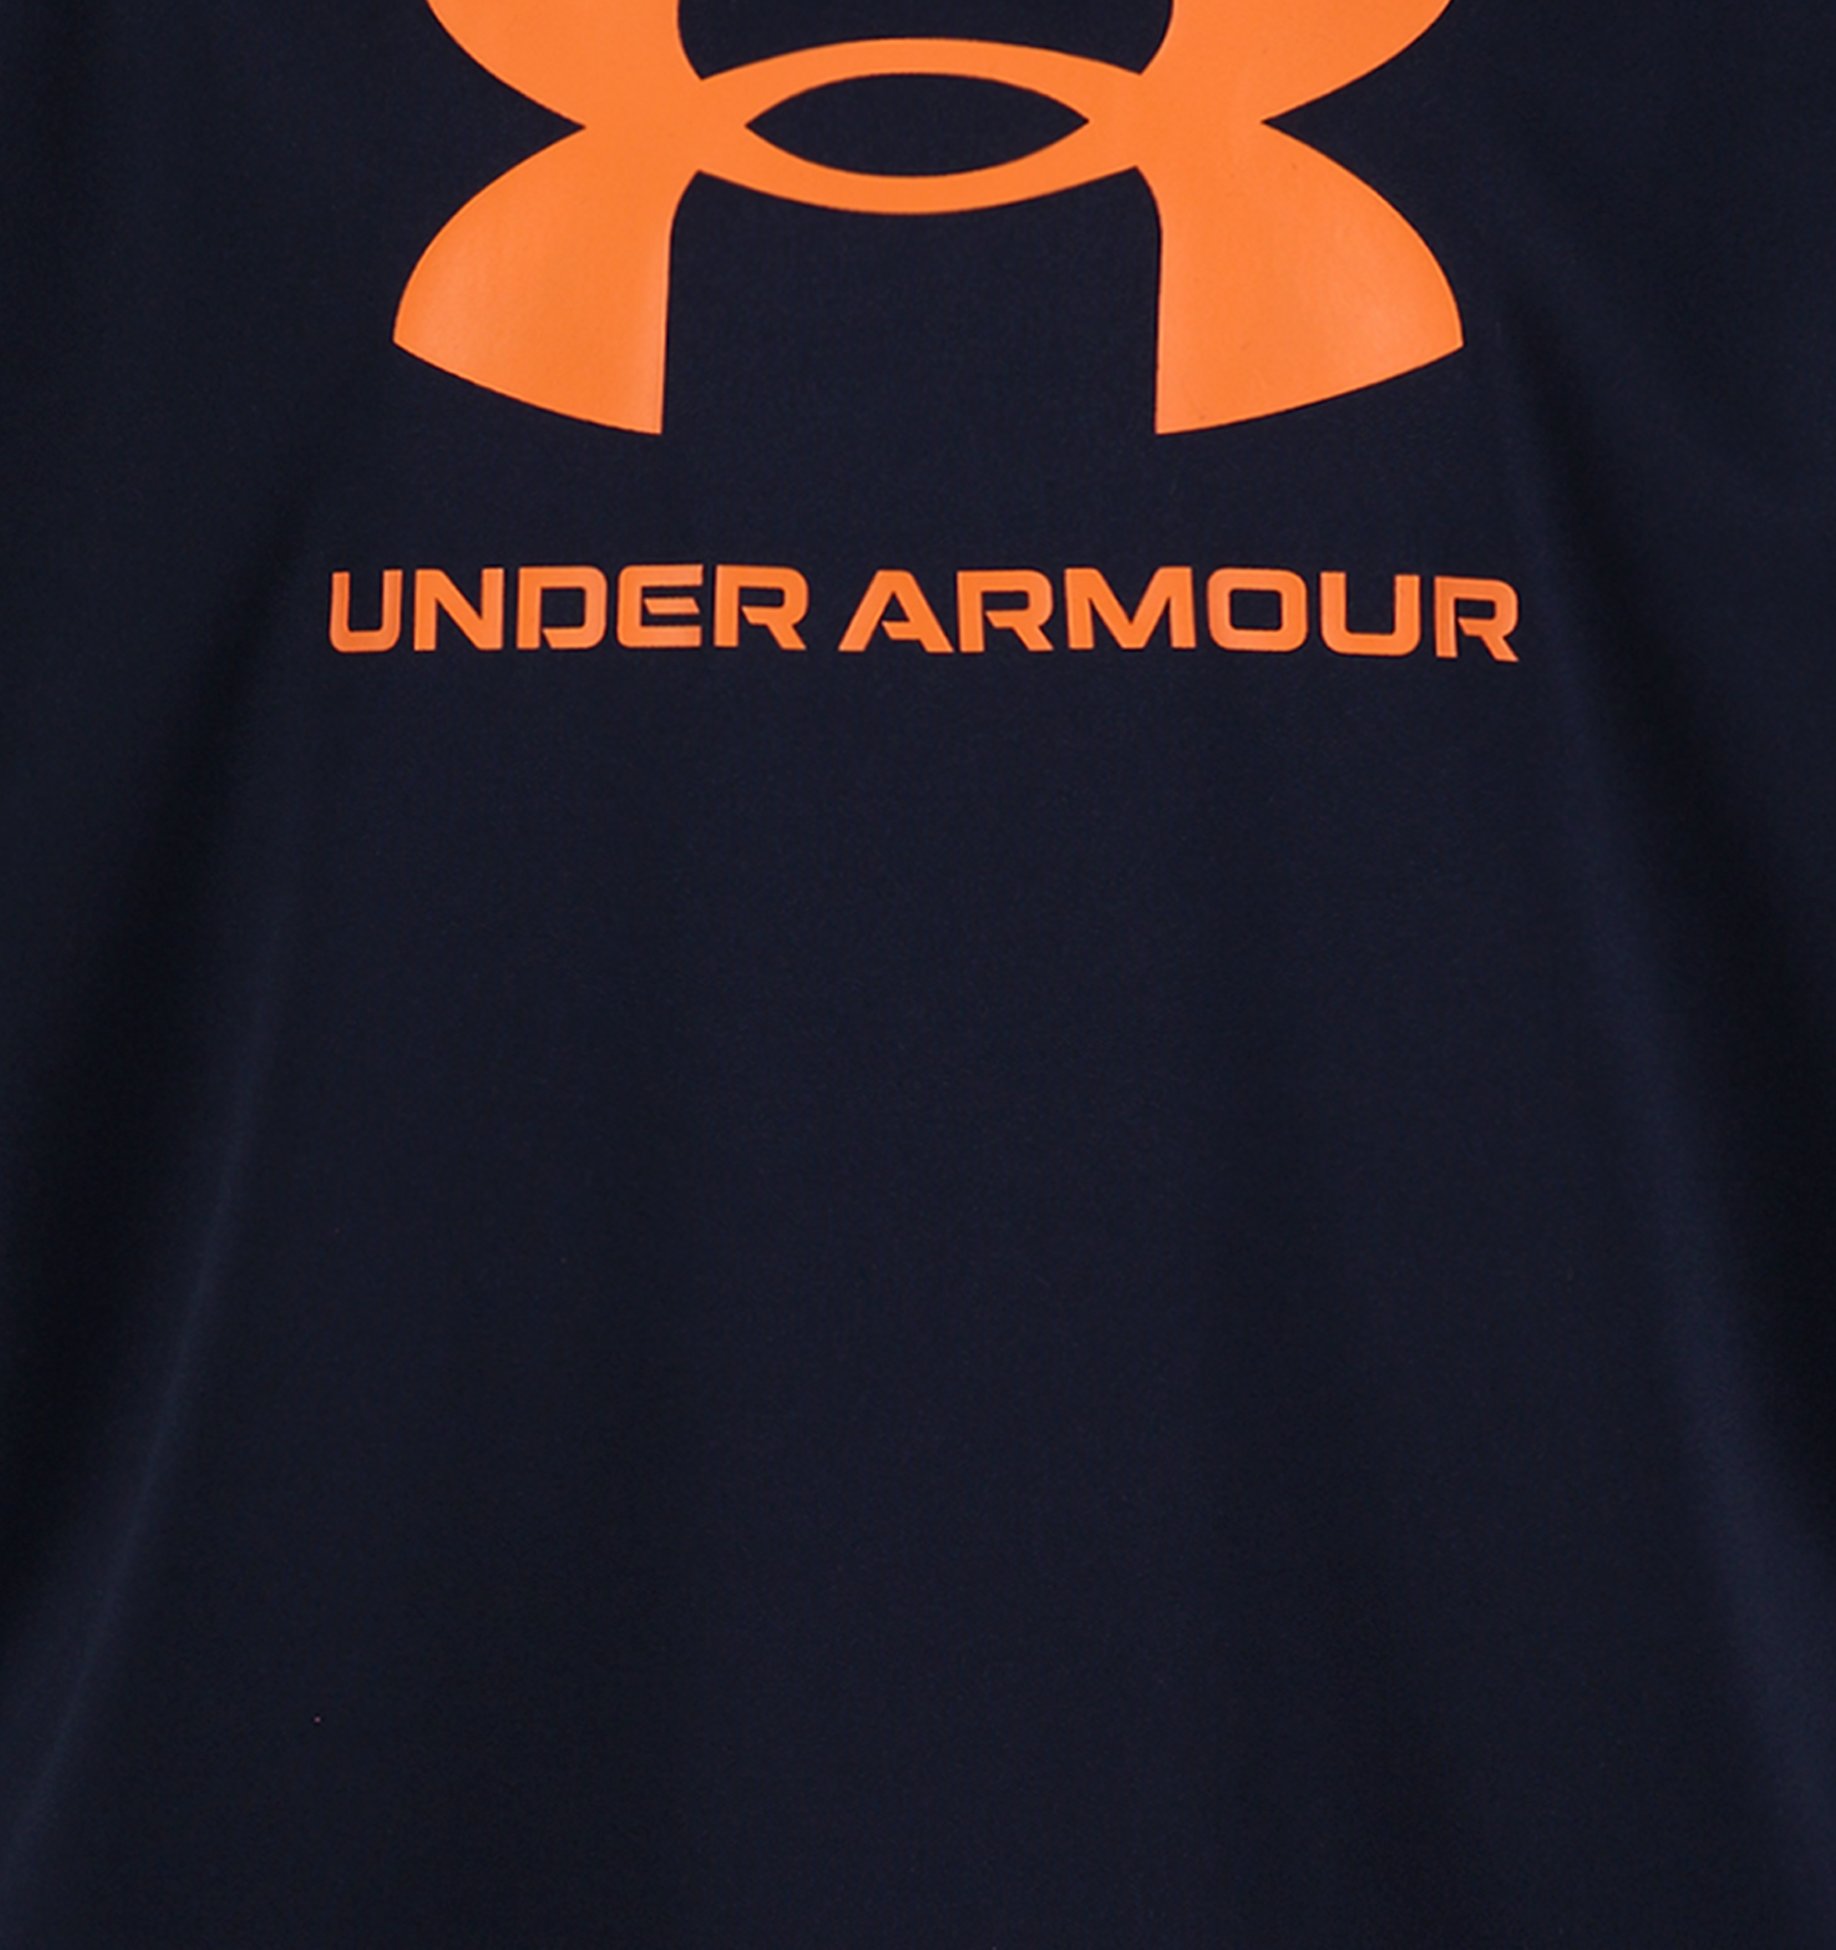 under armour logo orange and blue